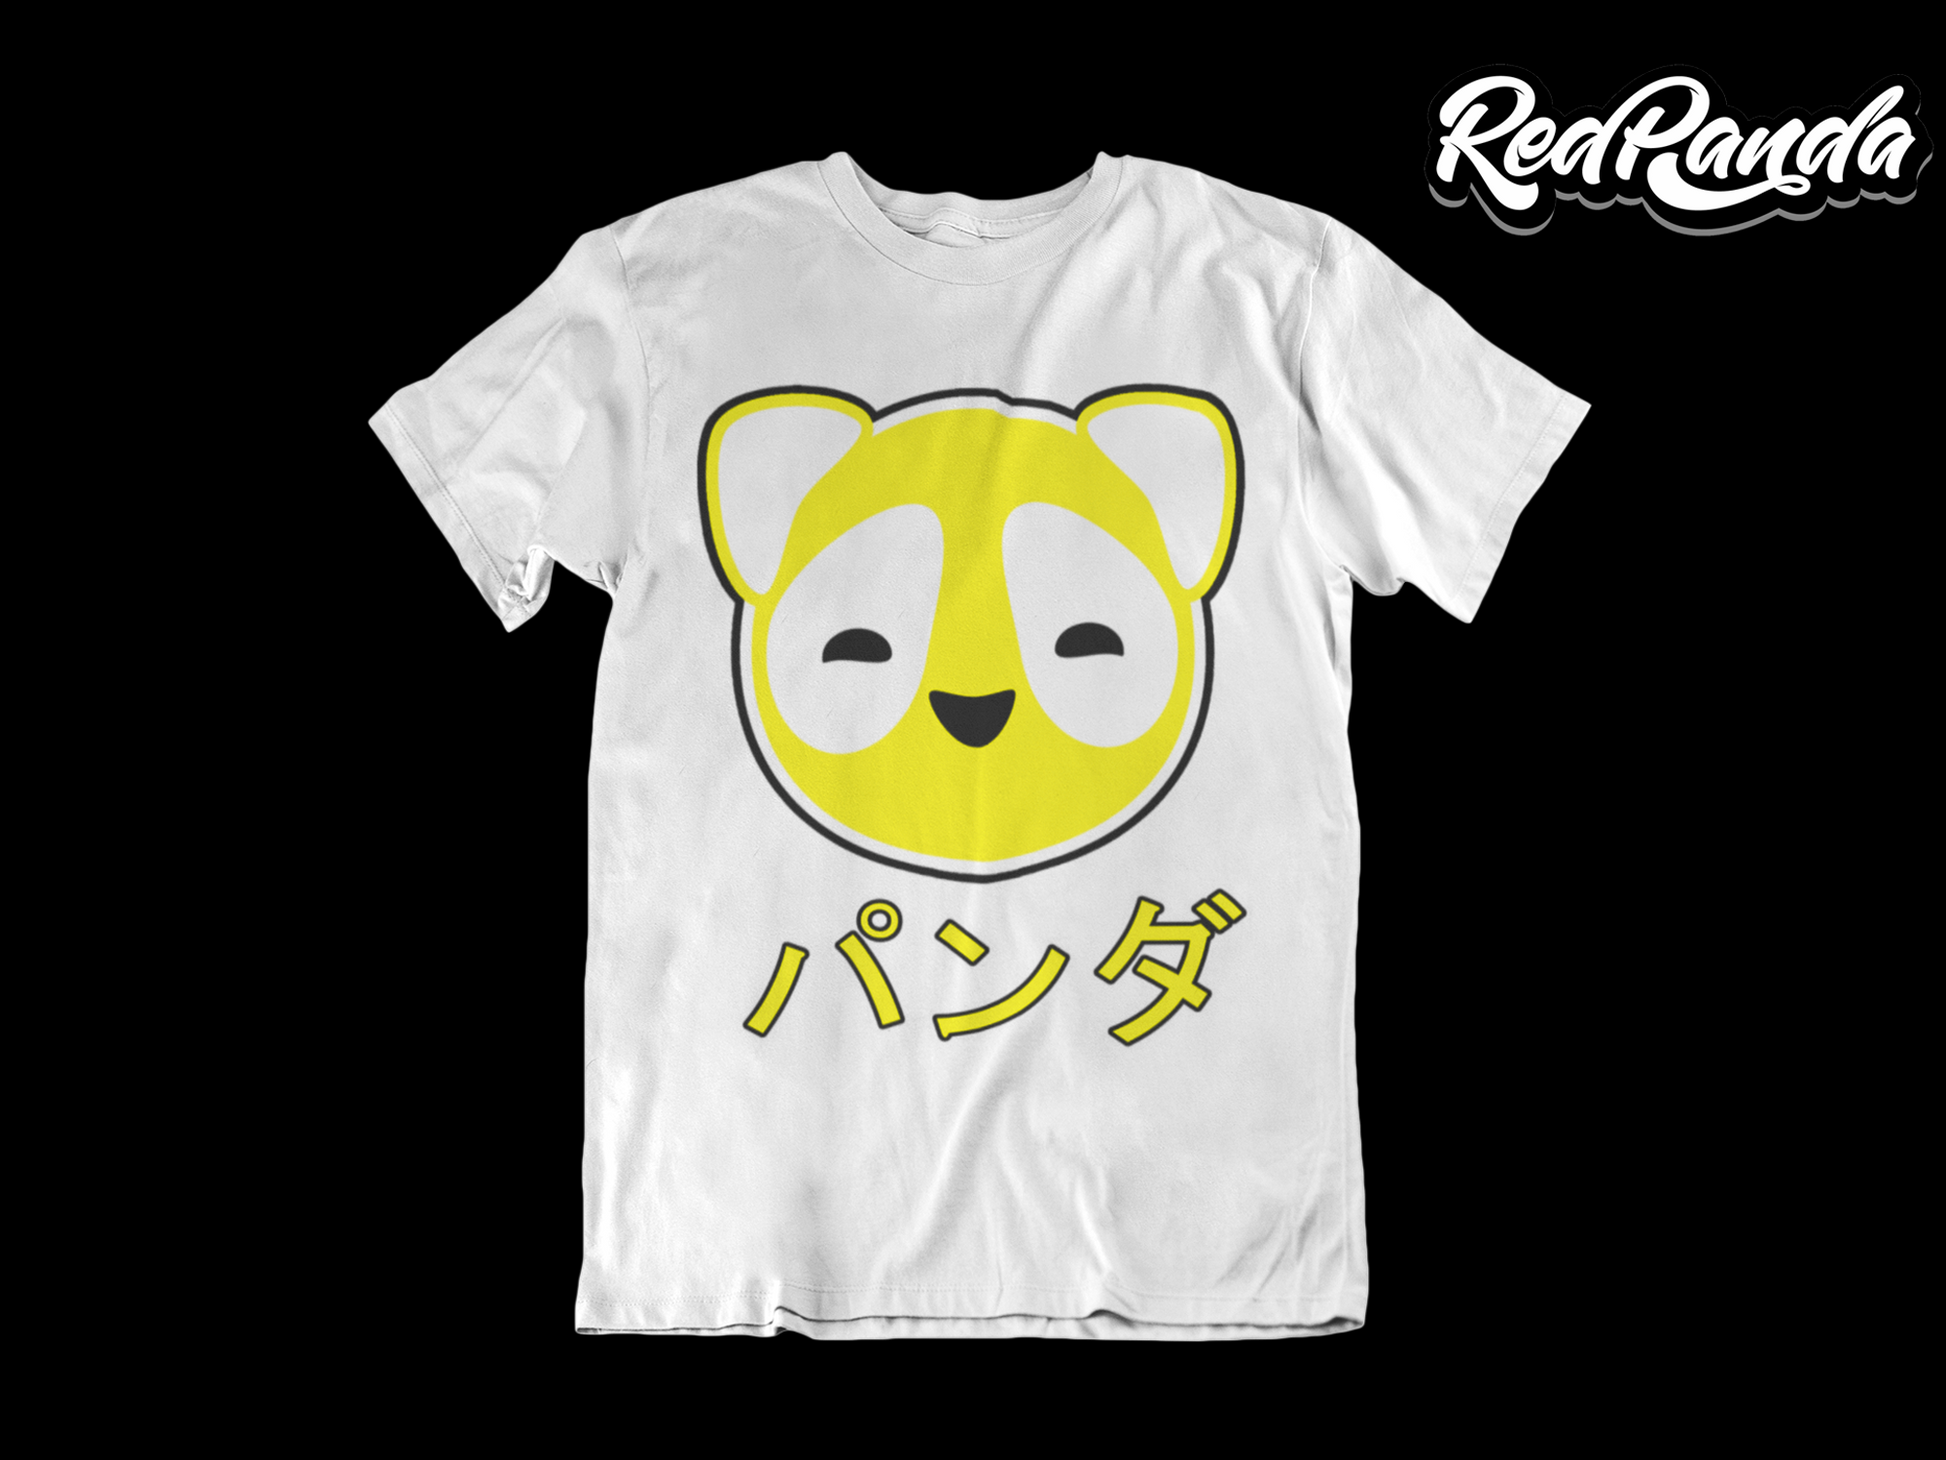 Cool Anime Shirts- by Red Panda